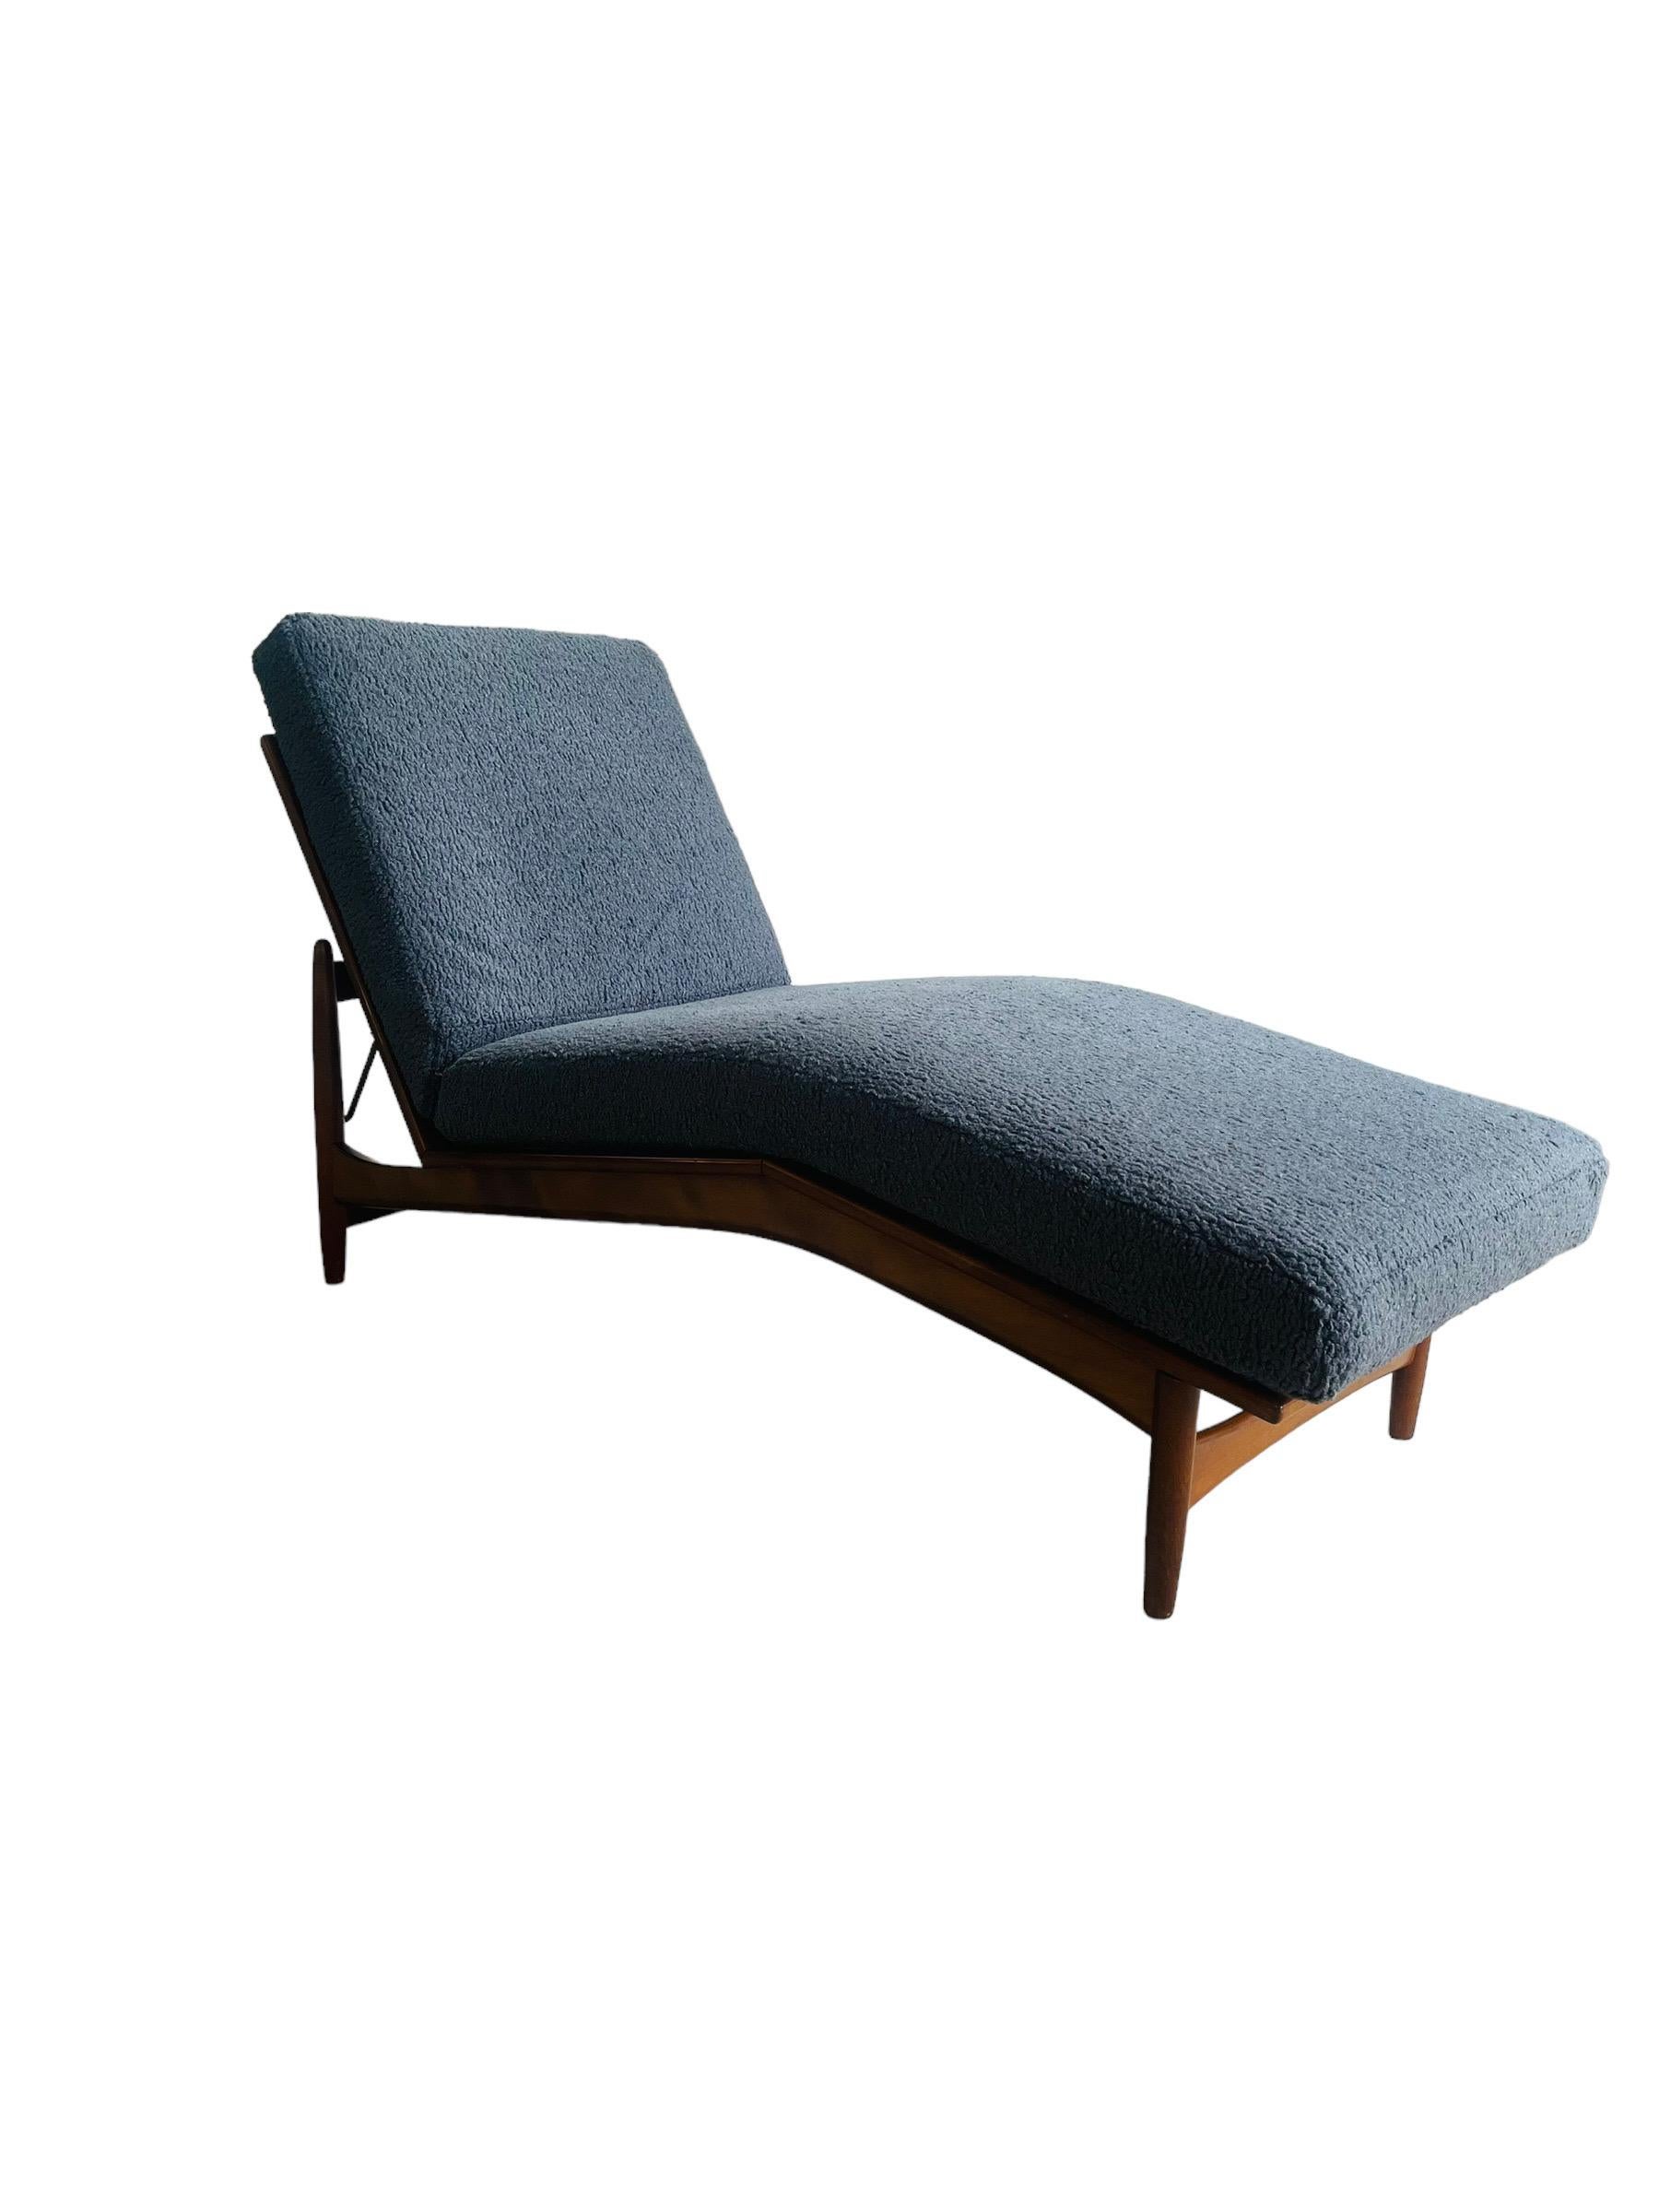 Mid-Century Modern Danish Modern Chaise Lounge by IB Kofod Larsen